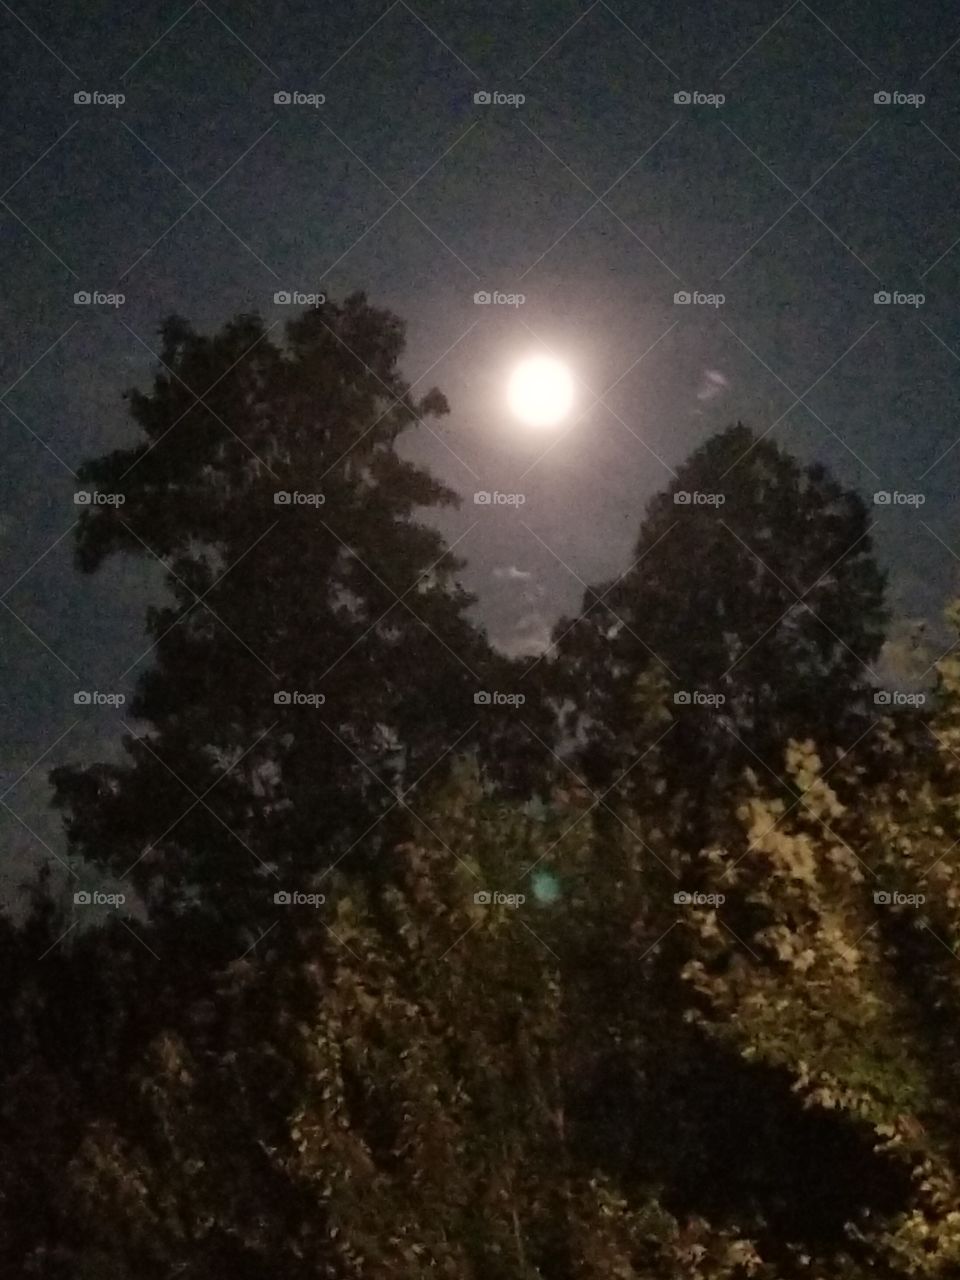 enjoying a full moon night. mountain moon shining at its best.